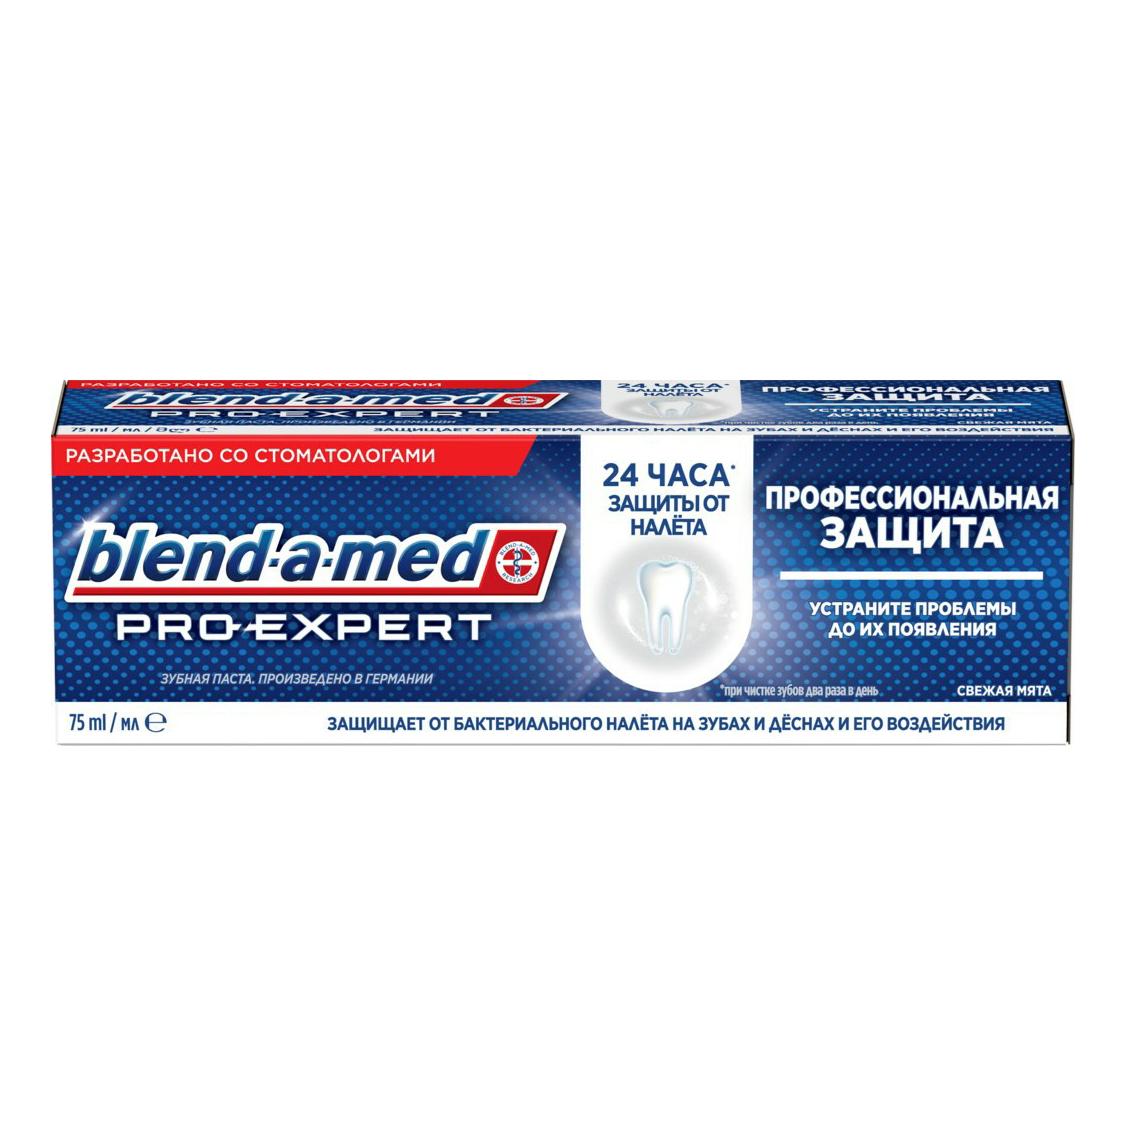 Купить зубная паста Blend-a-med Pro-Expert Профессиональная защита свежая мята 75 мл, цены на Мегамаркет | Артикул: 100030995059